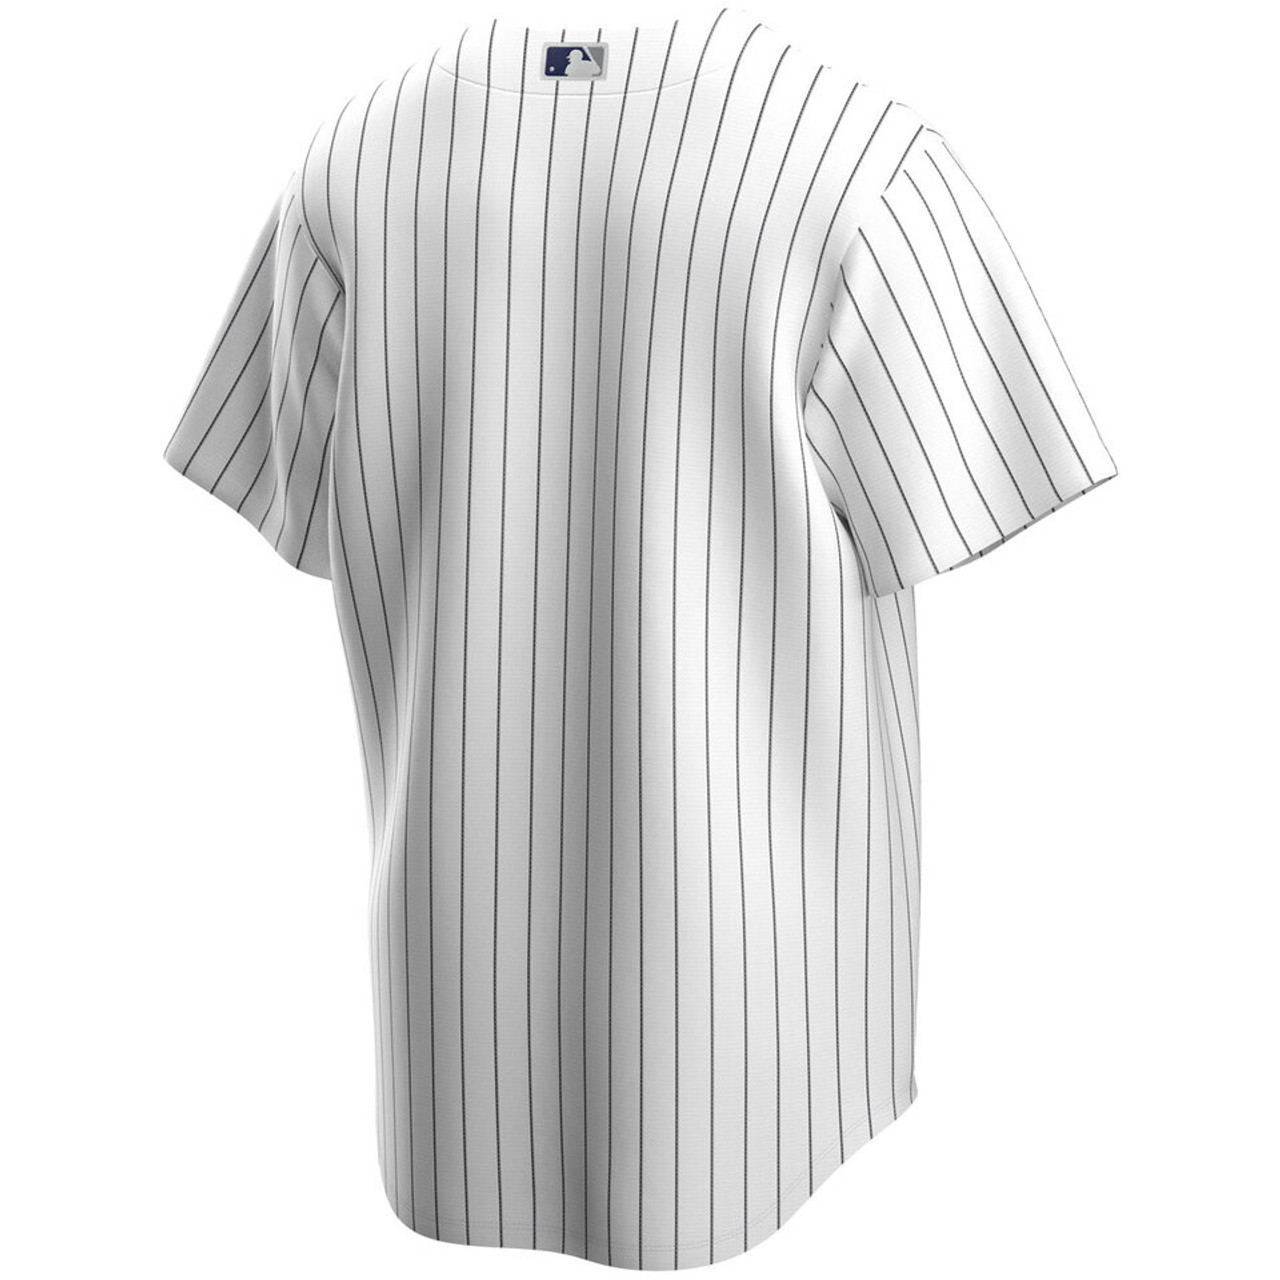 MLB Size 12M New York Yankees Alternate 2 Replica Baseball Jersey in Navy